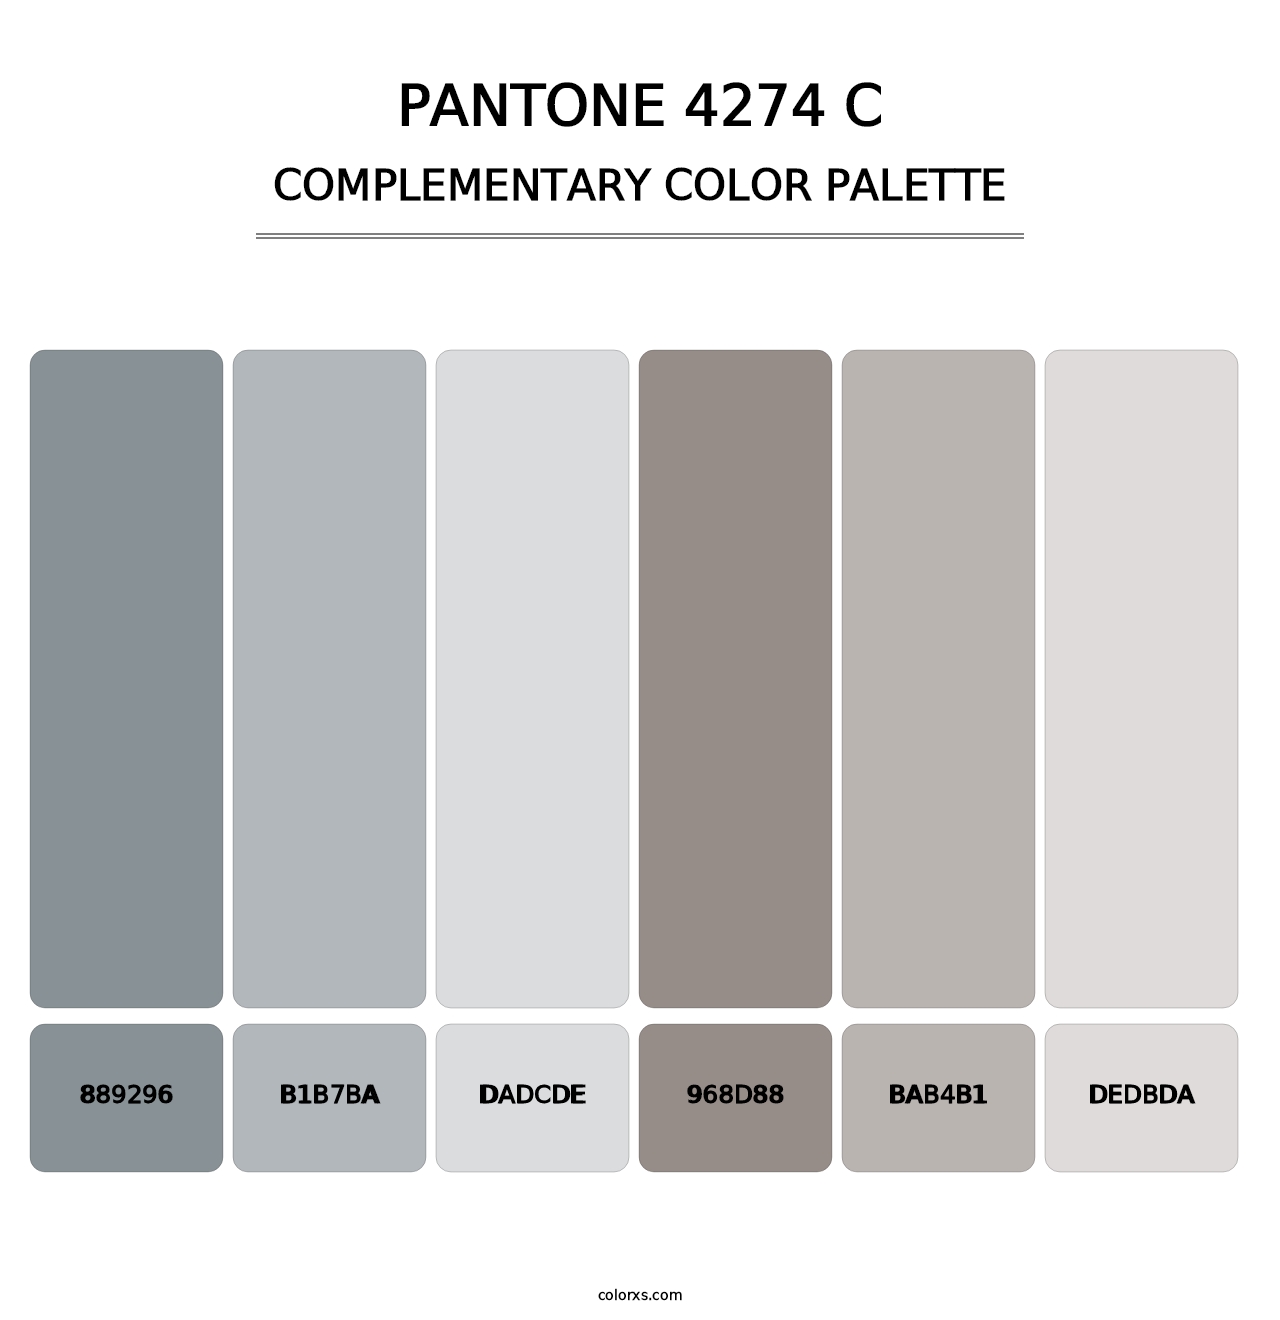 PANTONE 4274 C - Complementary Color Palette